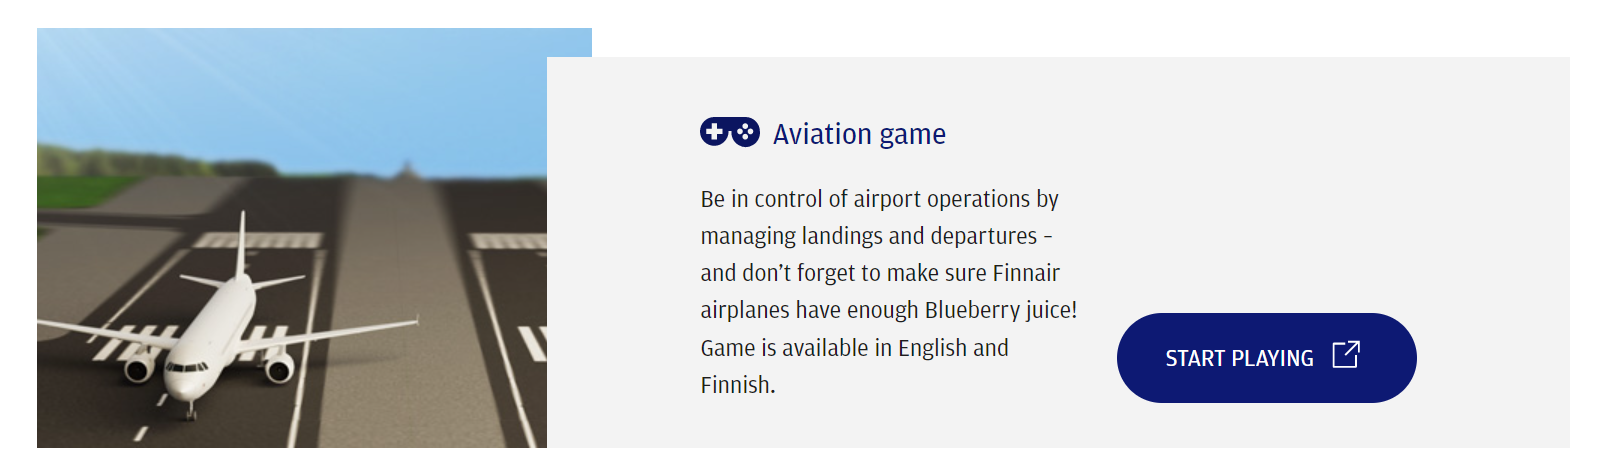 Aviation game on Finnair